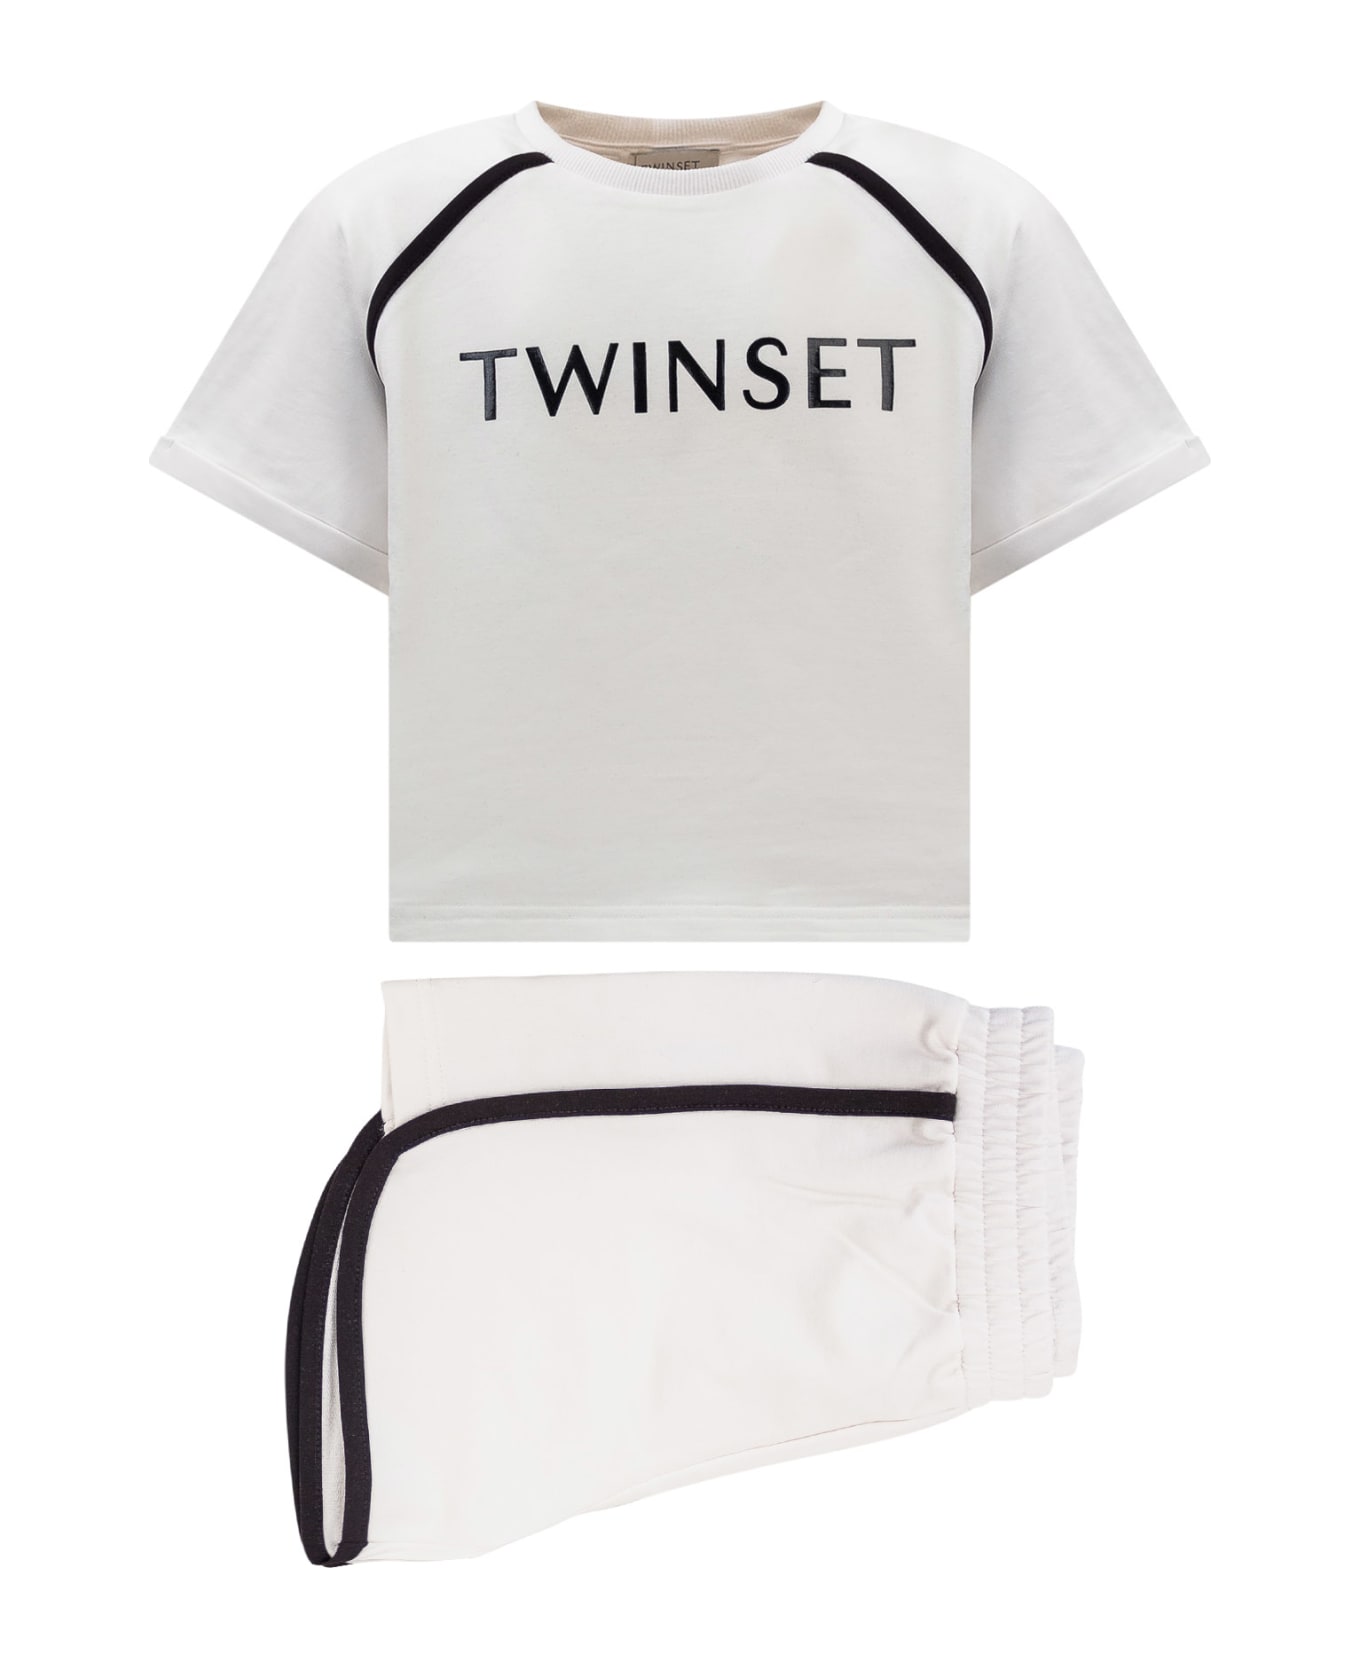 TwinSet T-shirt And Shorts Set - BIC.LUCENT WHITE/NERO